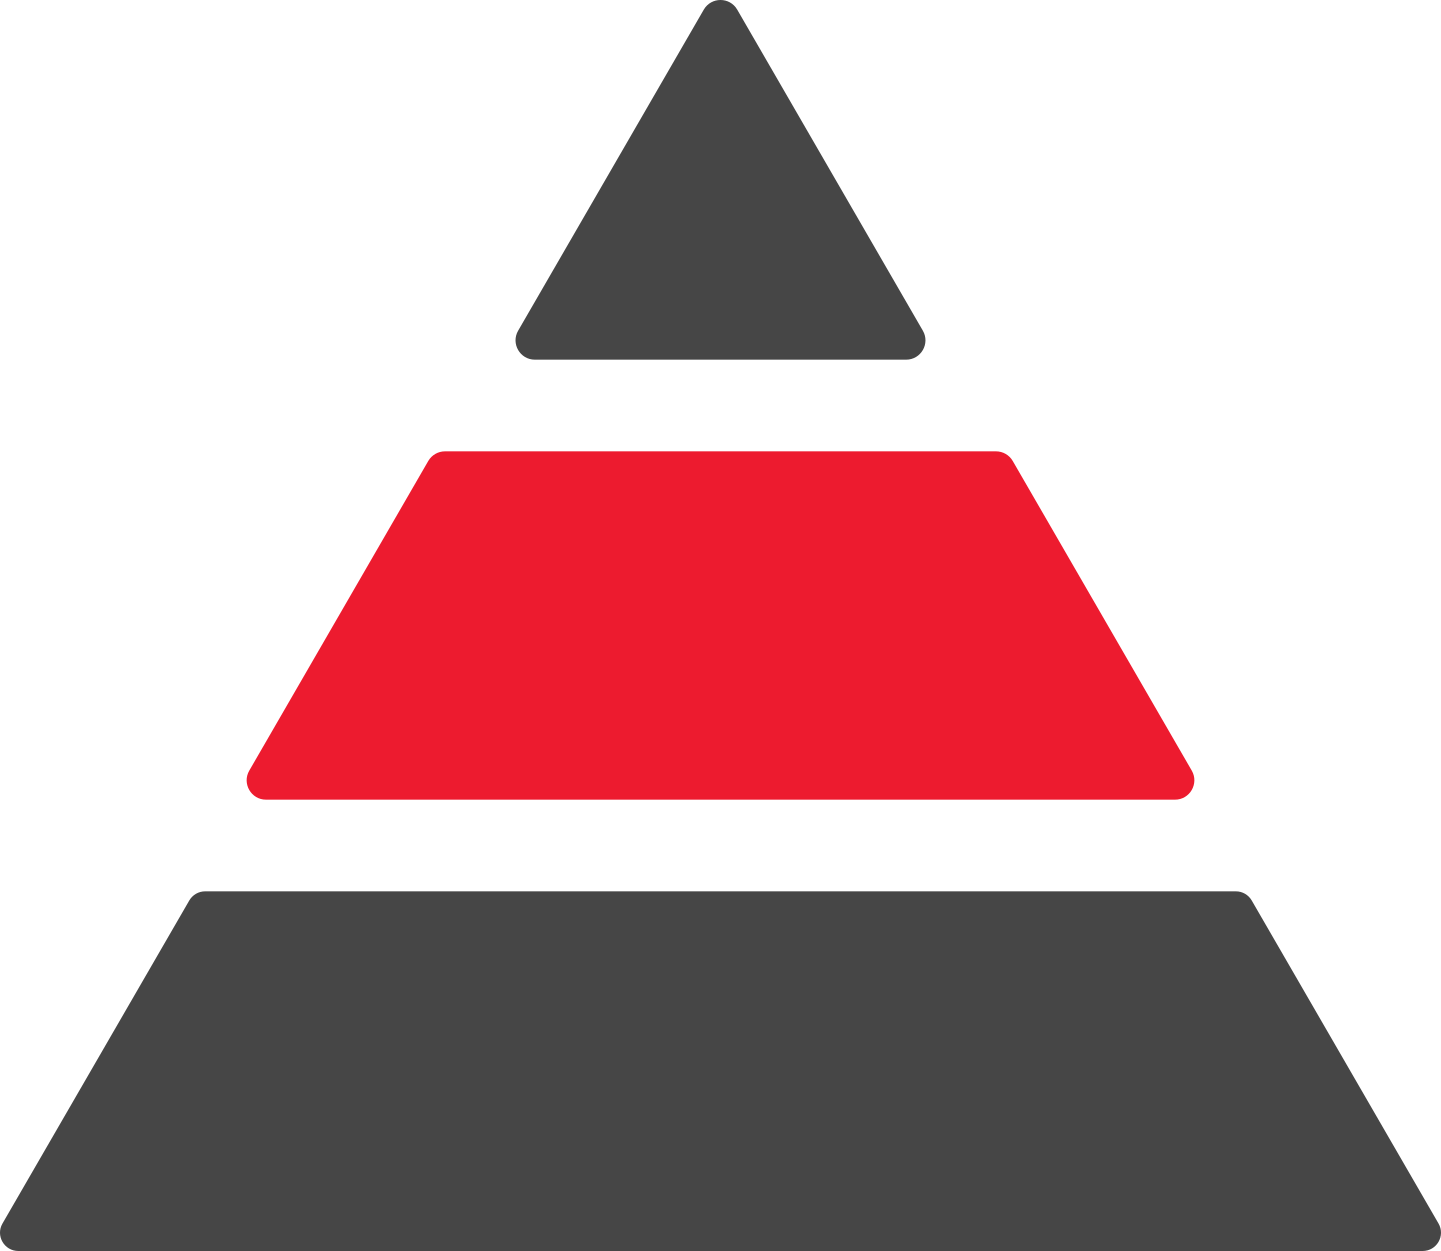 Pyramid of change icon